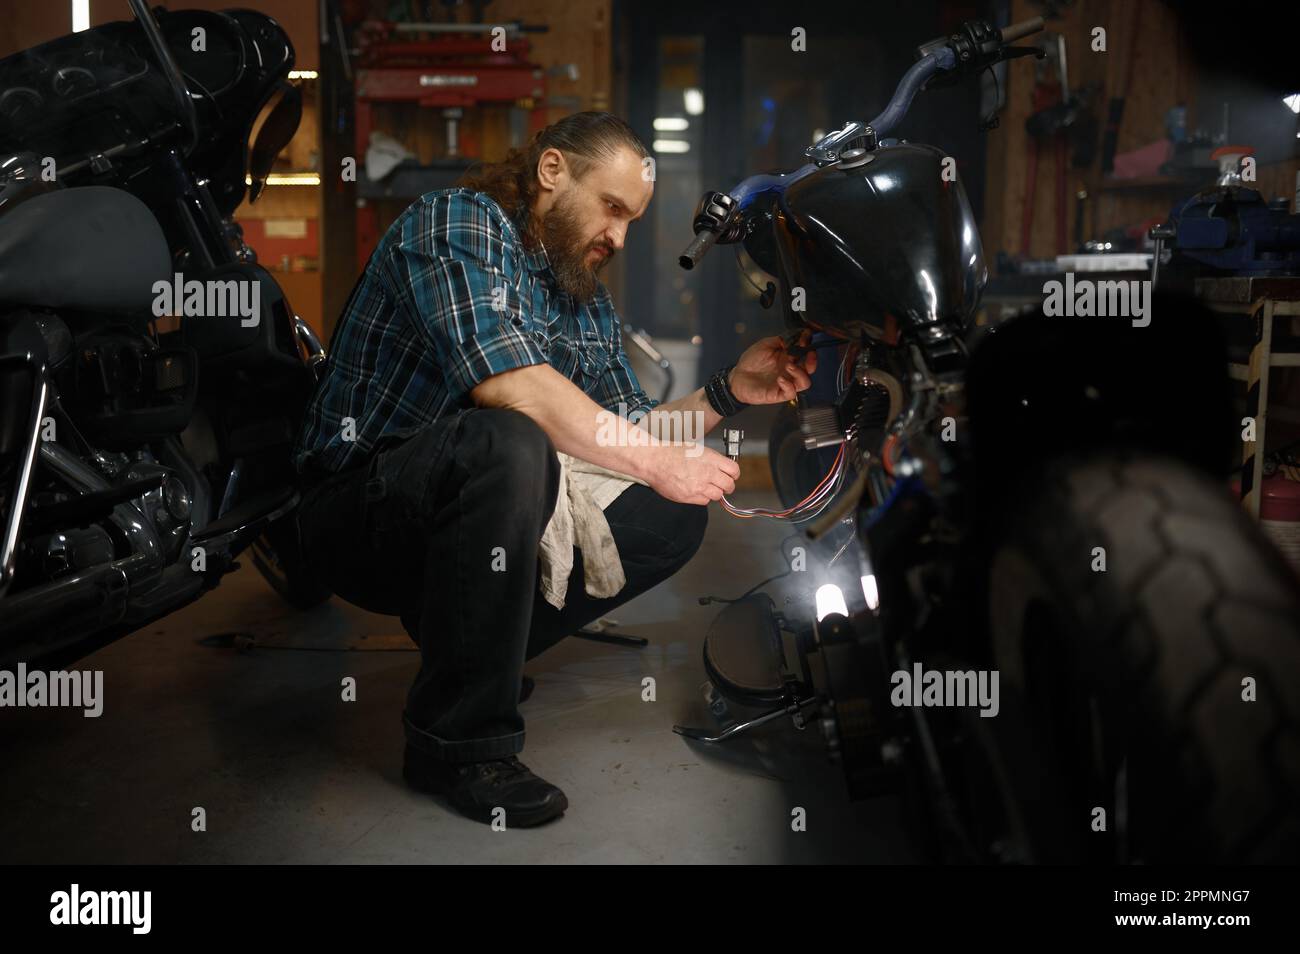 Mature man biker repairing motorcycle in garage at evening Stock Photo